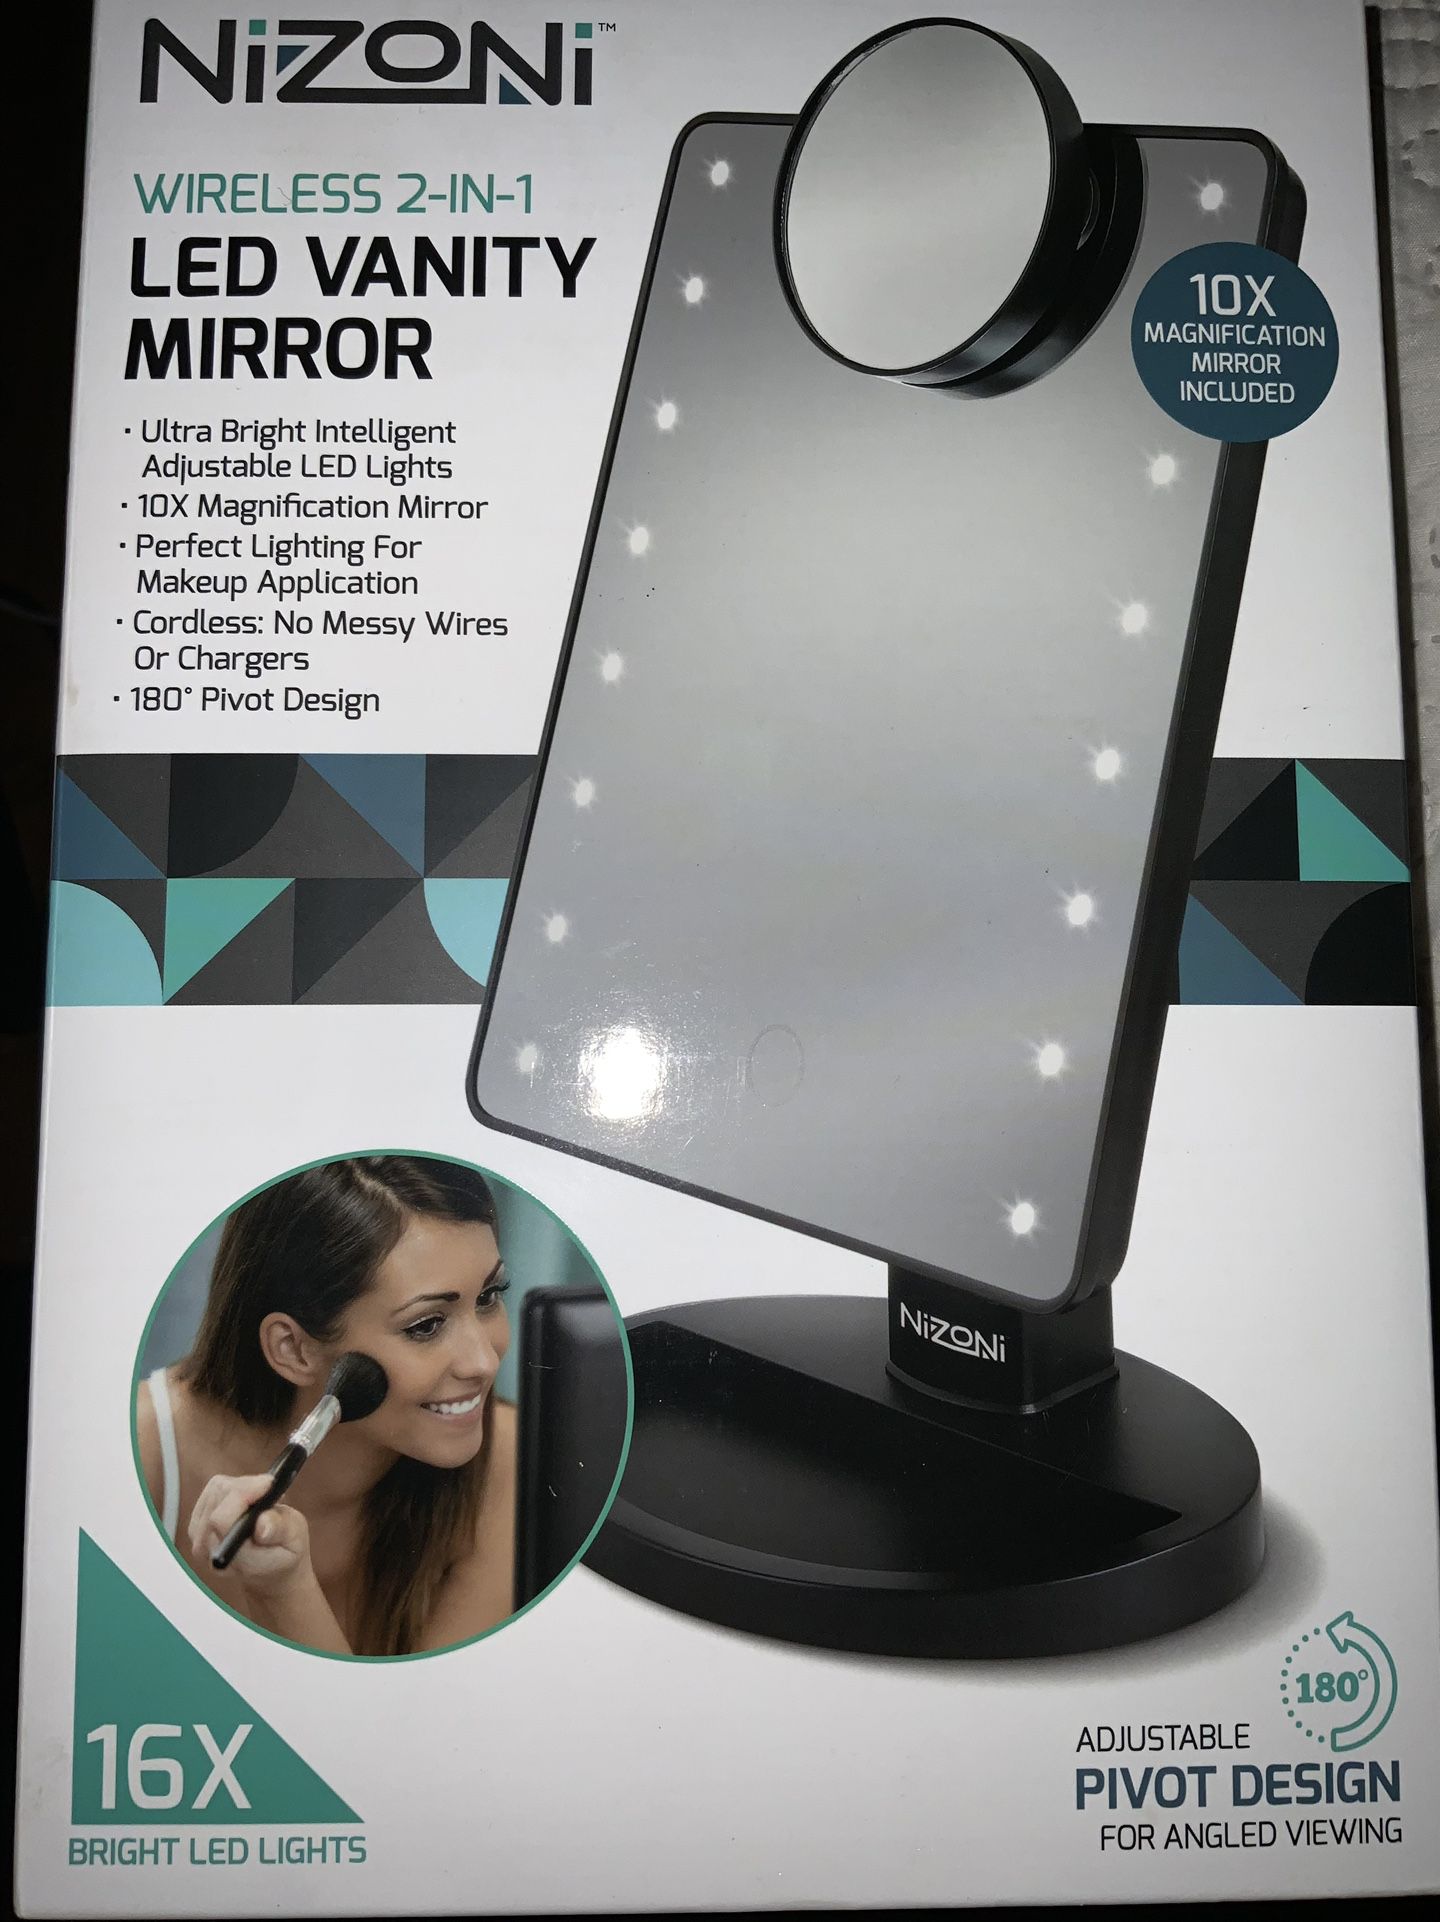 Nizoni LED Vanity mirror